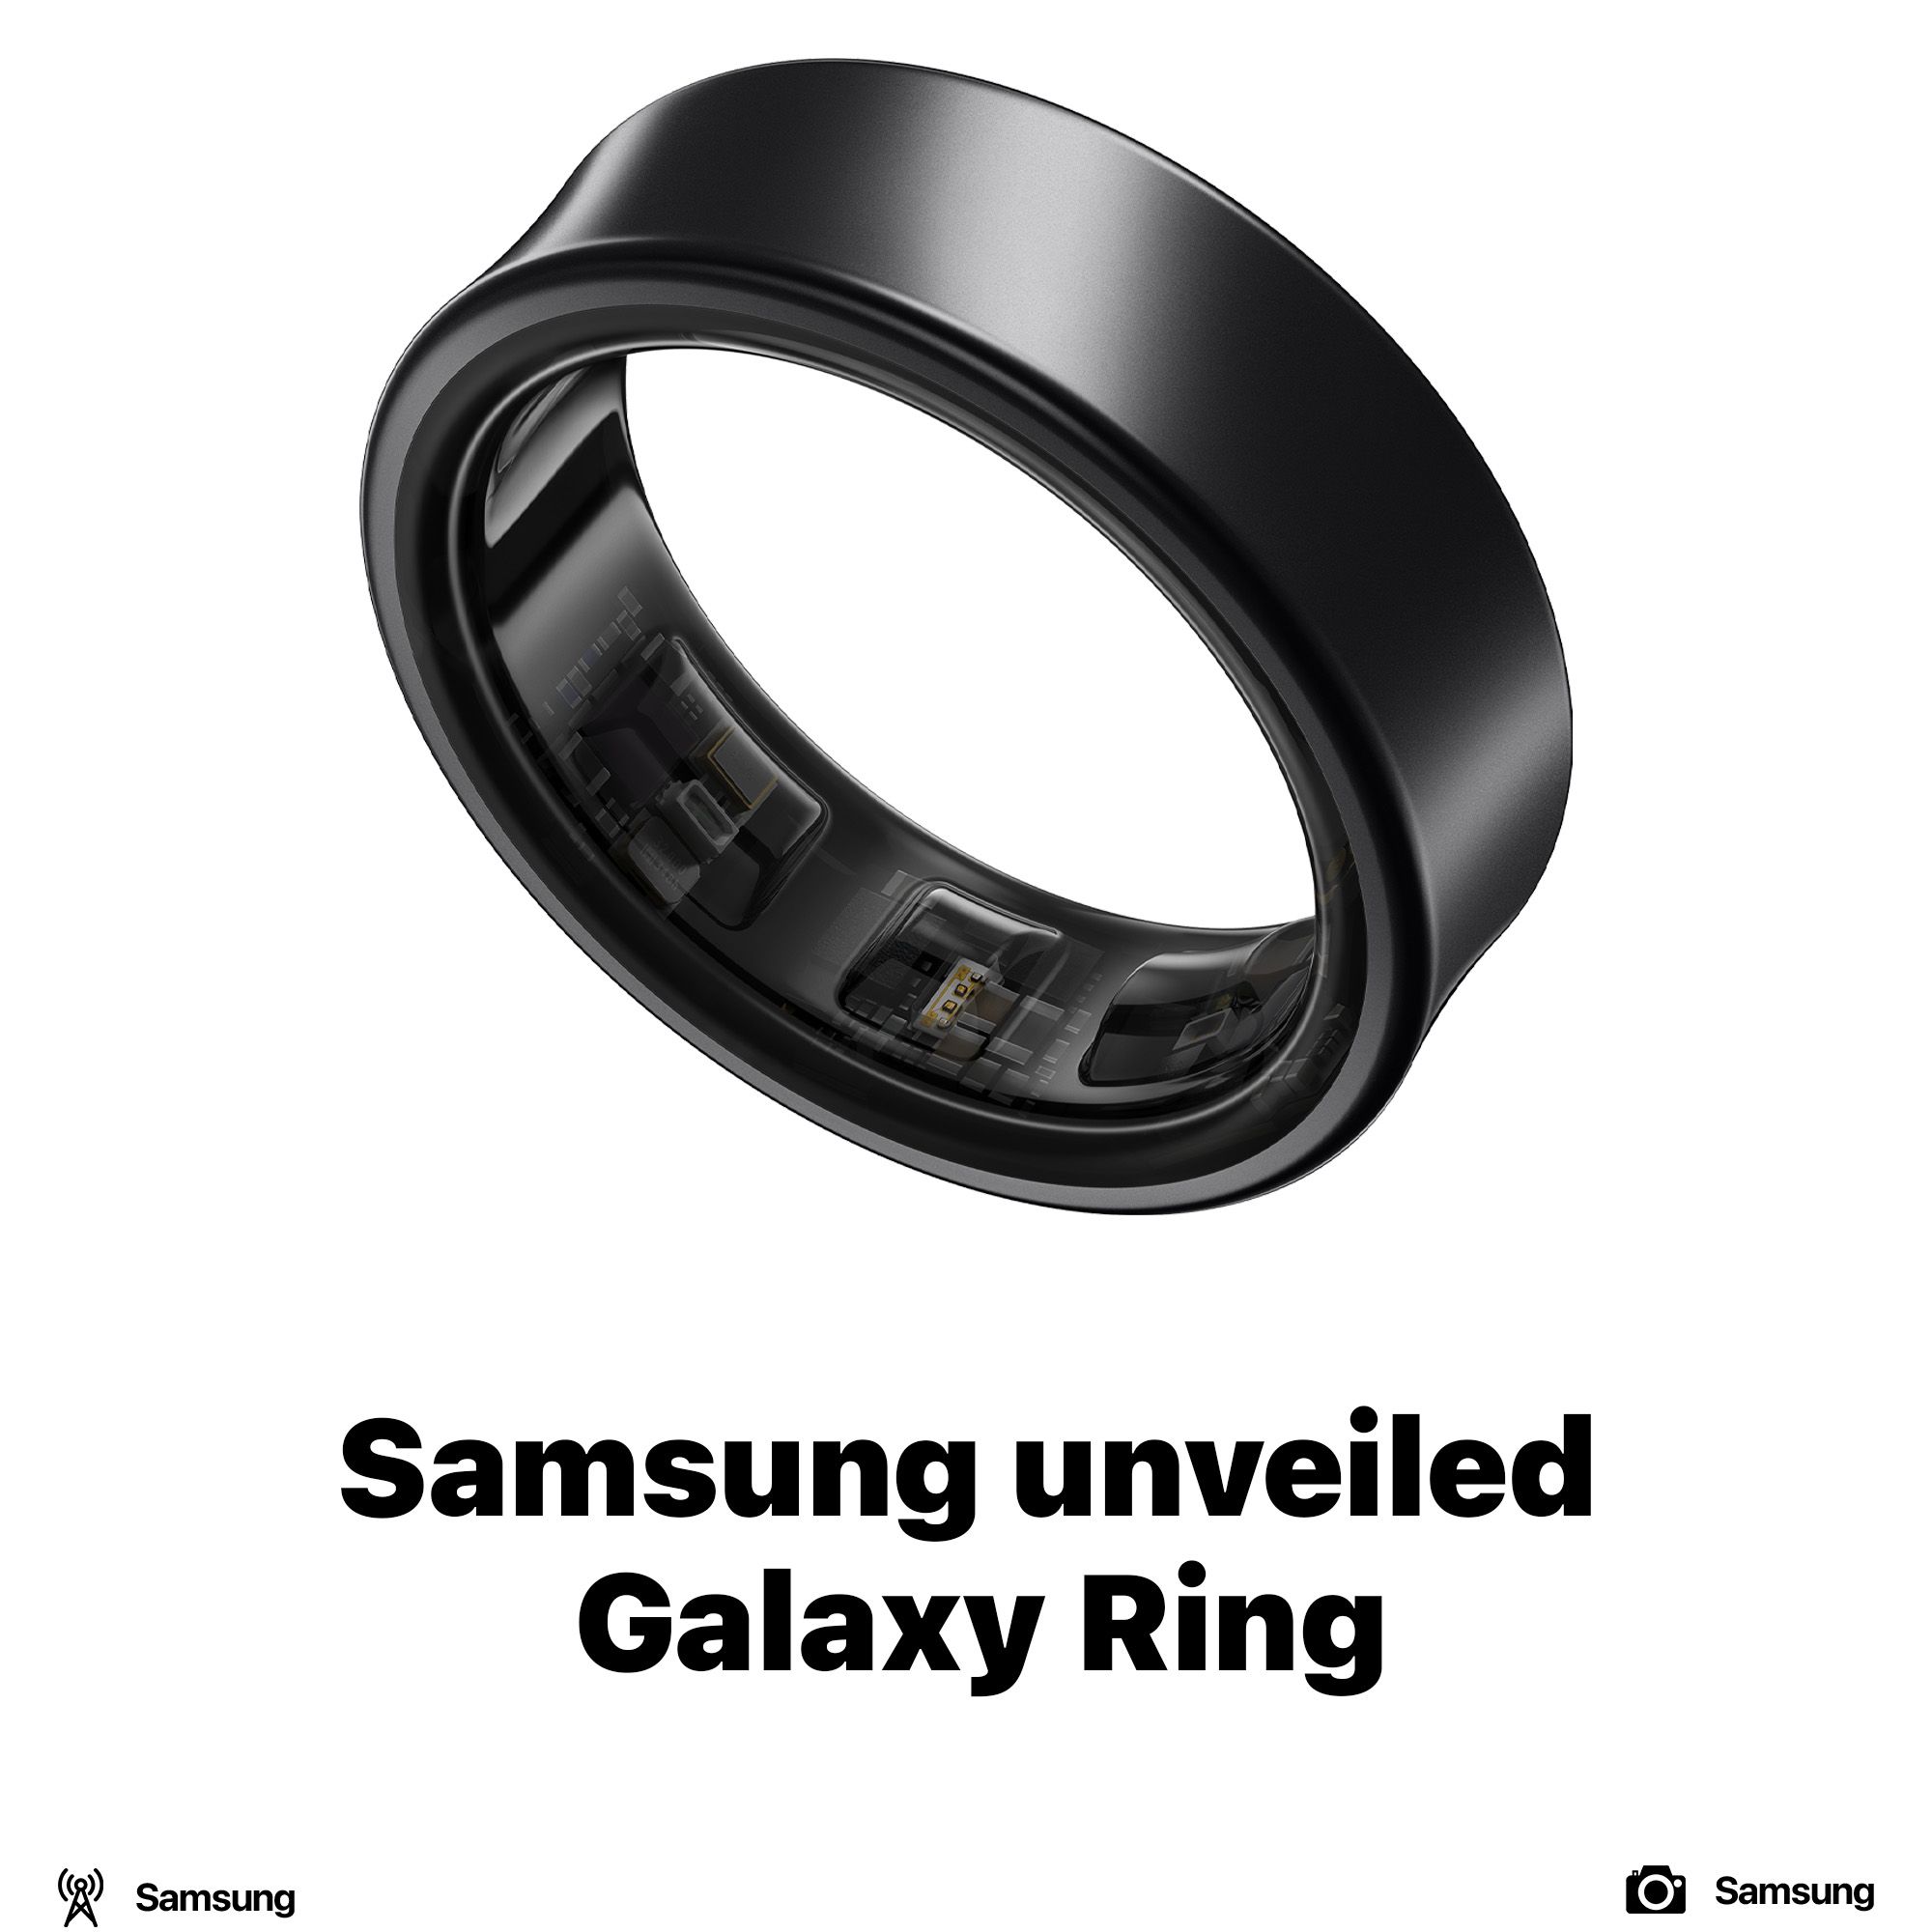 Samsung unveiled Galaxy Ring